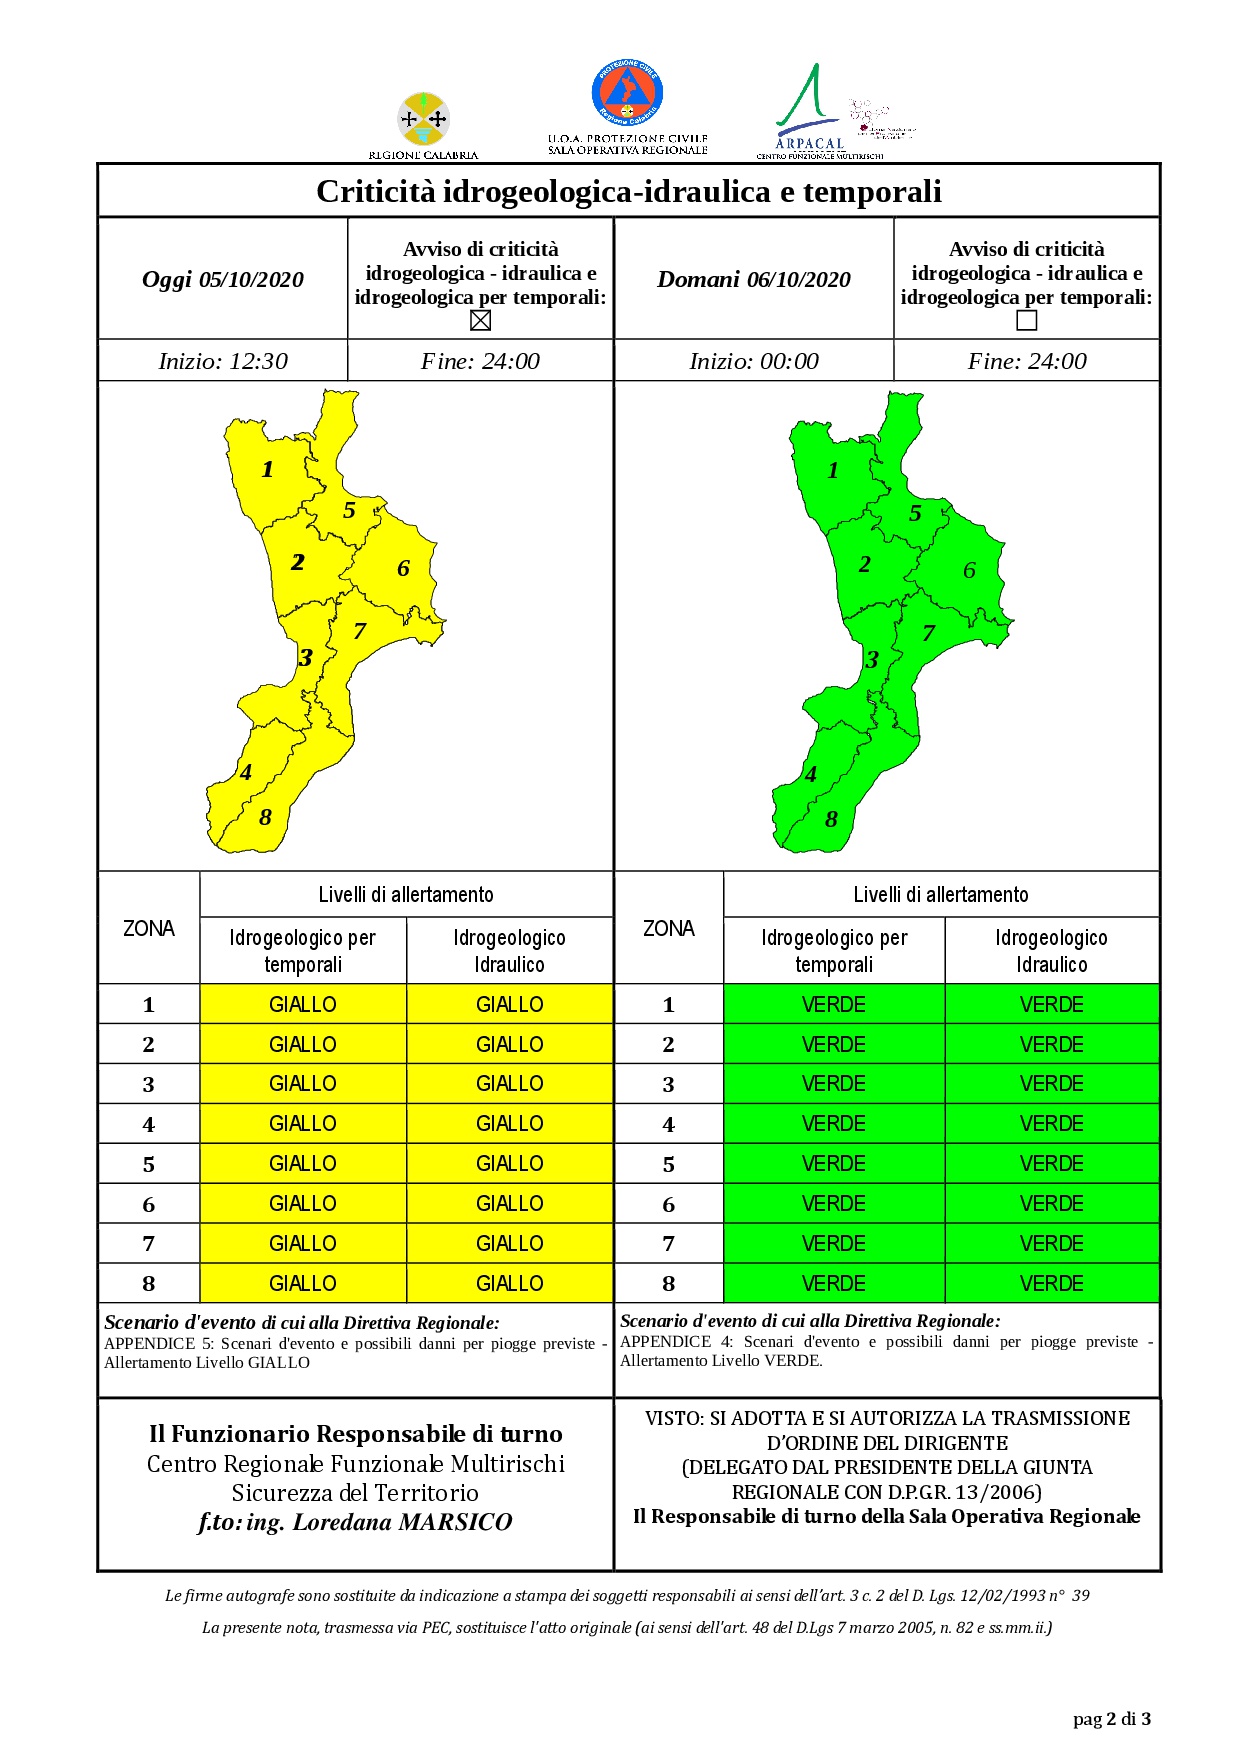 Criticità idrogeologica-idraulica e temporali in Calabria 05-10-2020